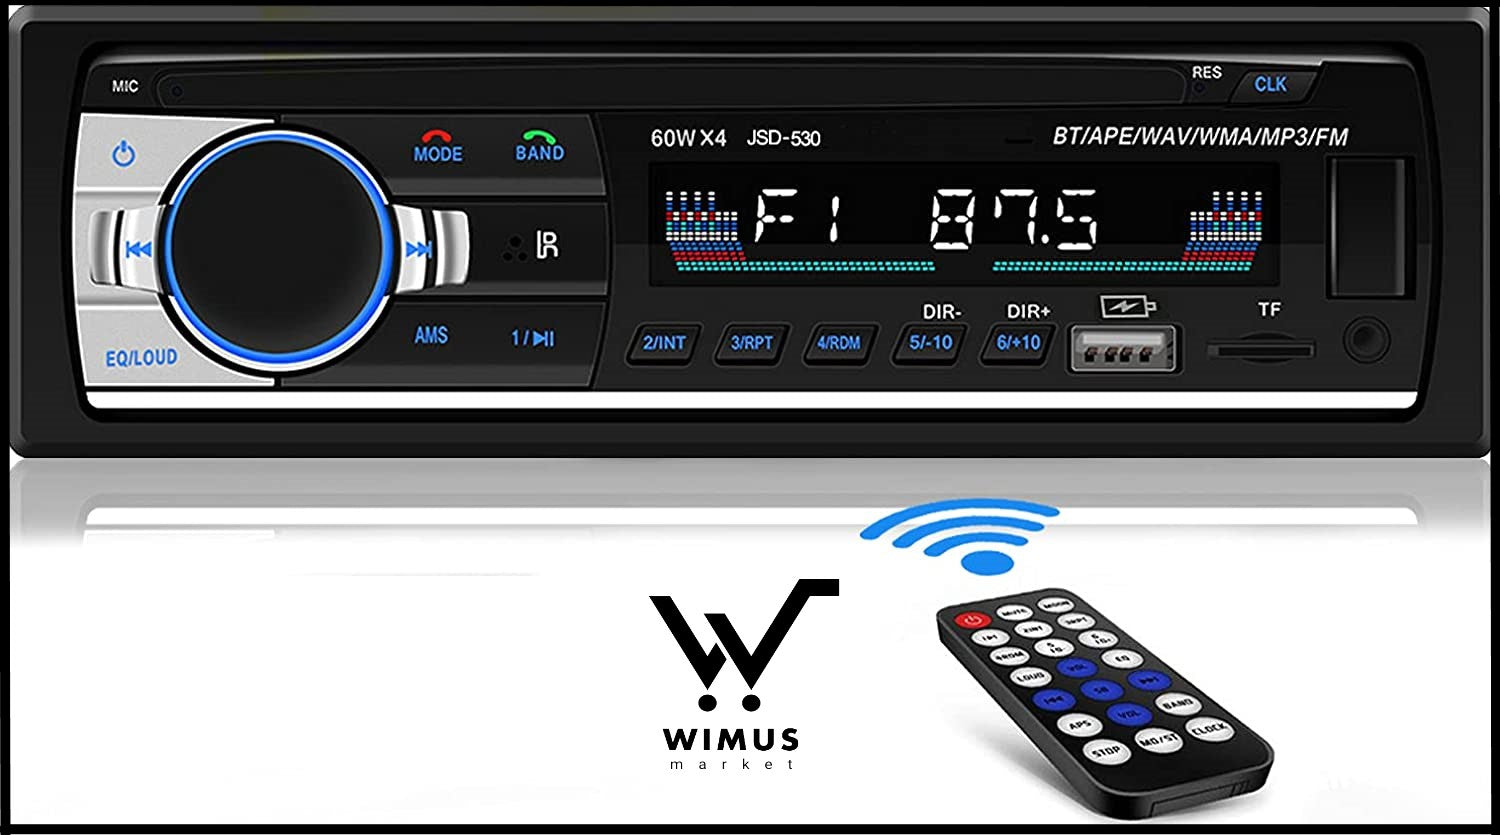 Radio 1 DIN para coche con pantalla, Bluetooth y cámara trasera: 48 euros